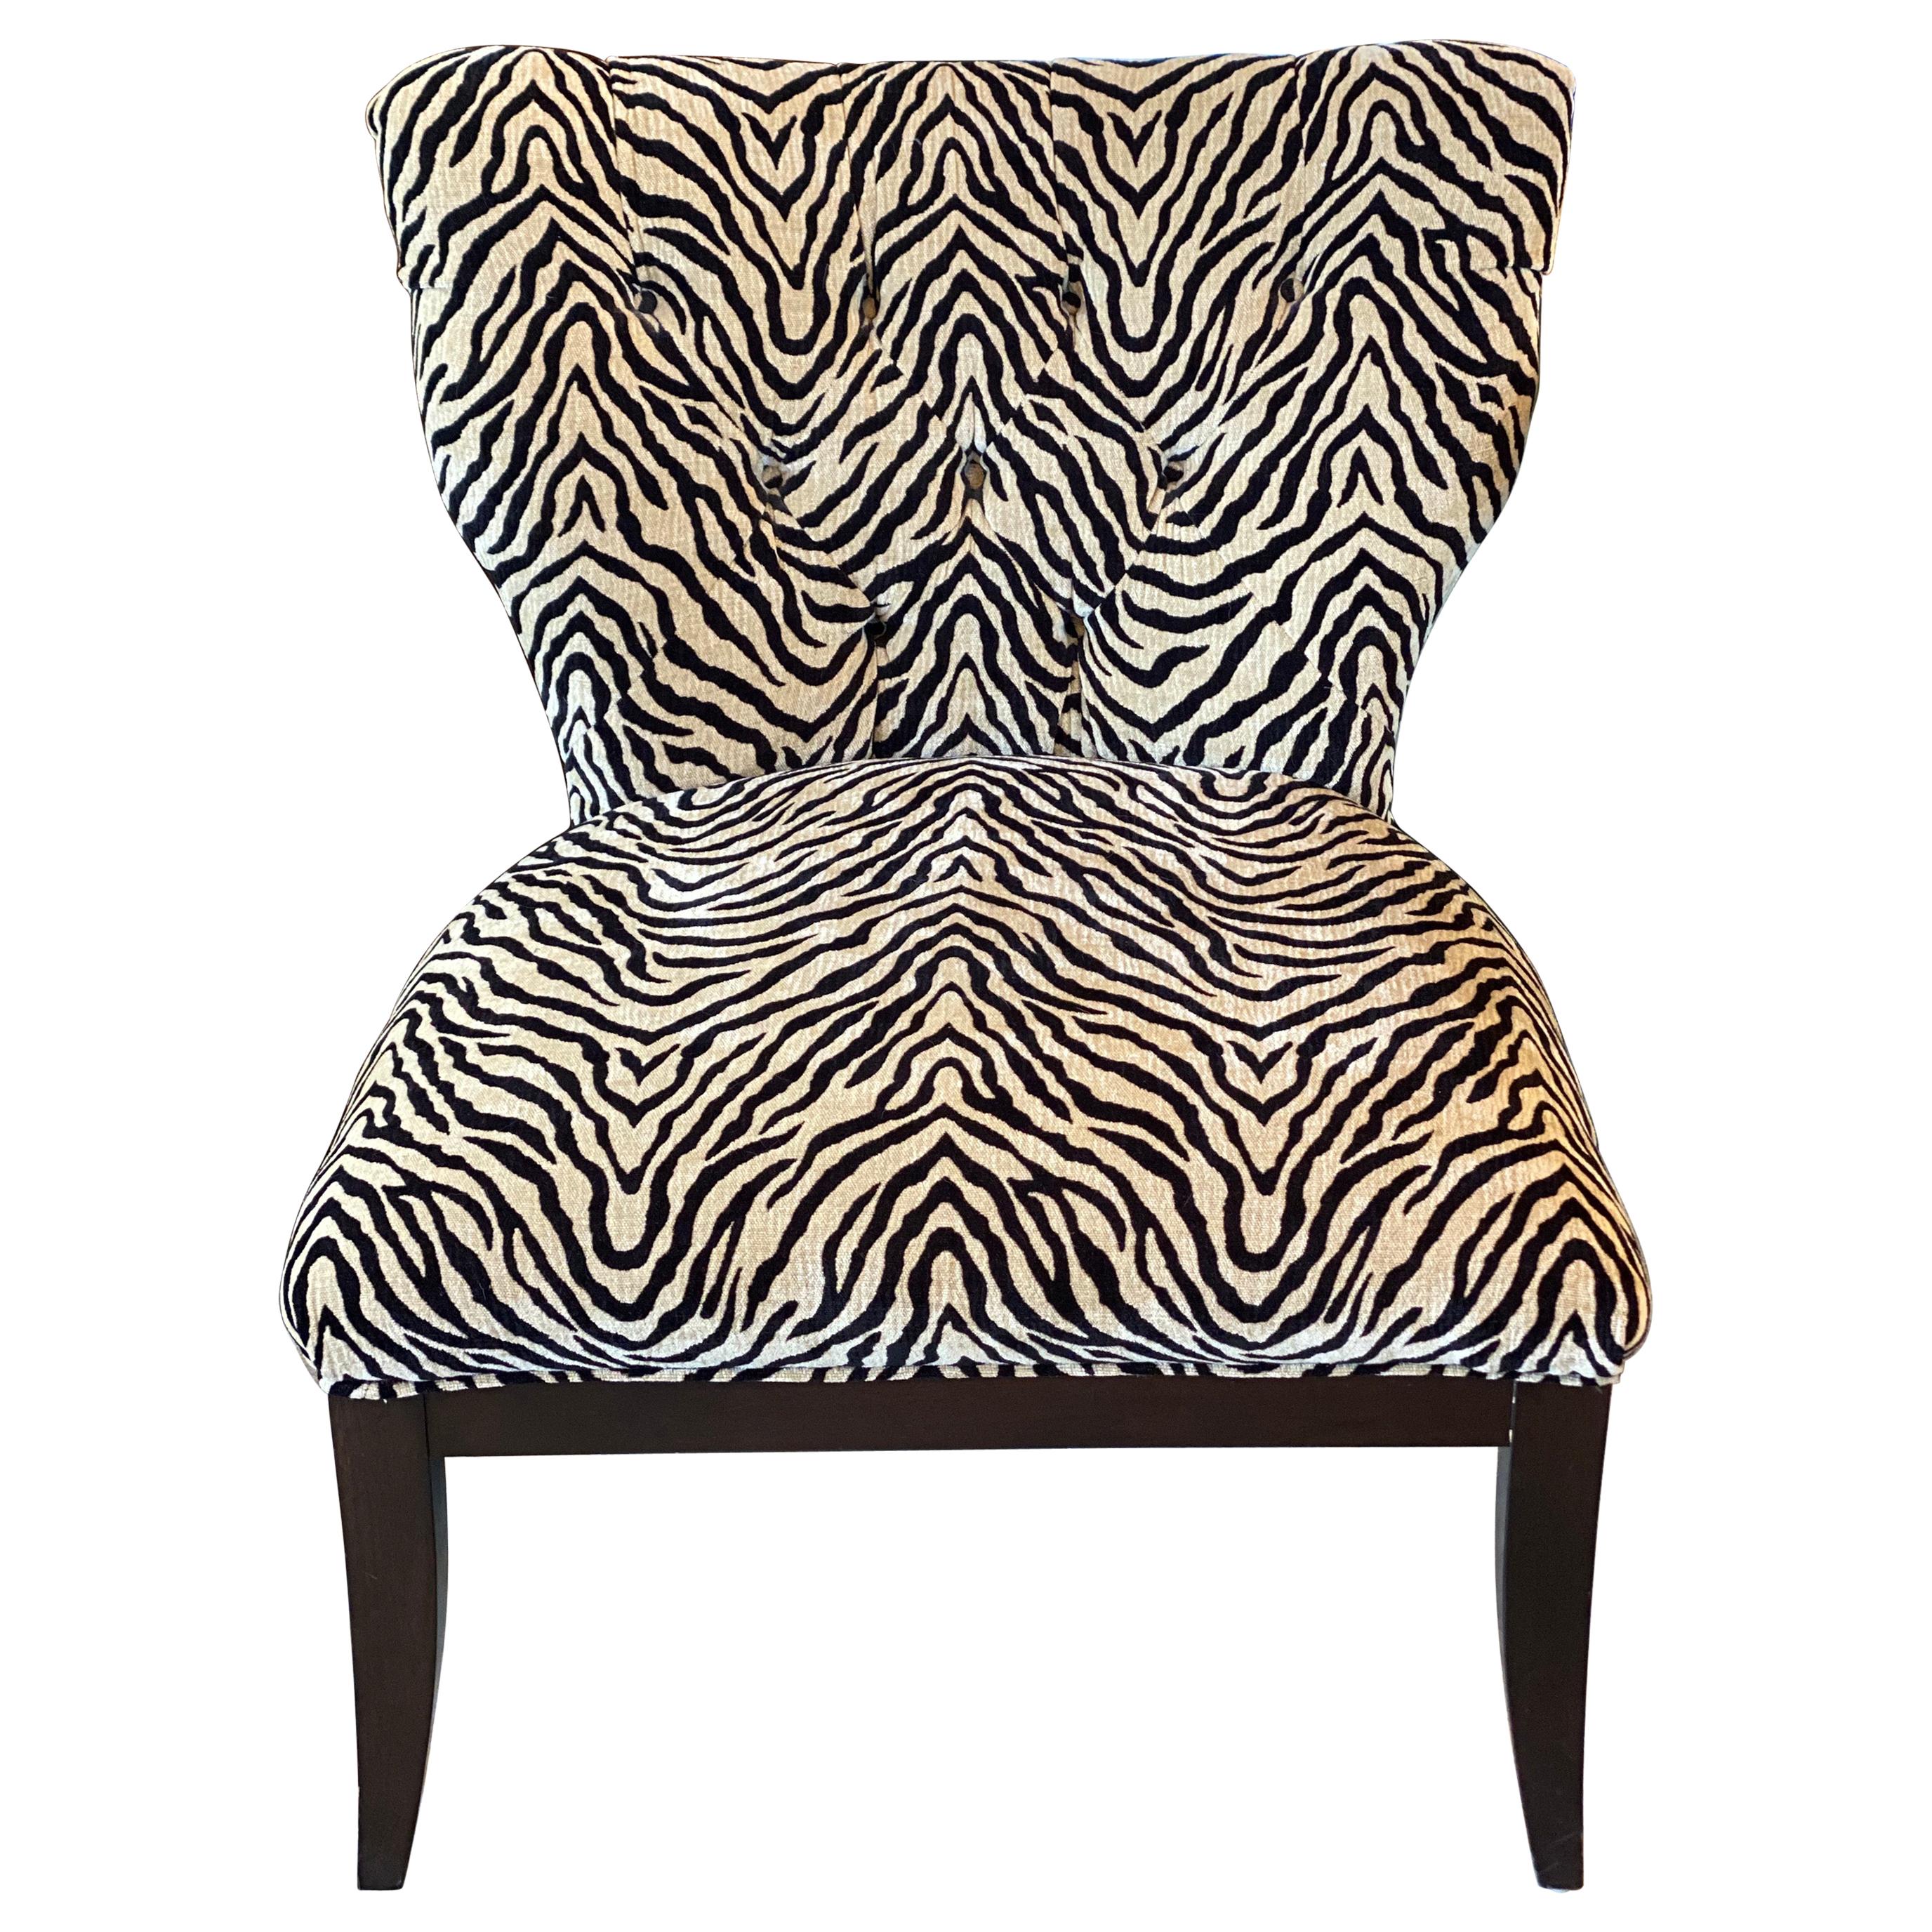 Zebra Wing Chair